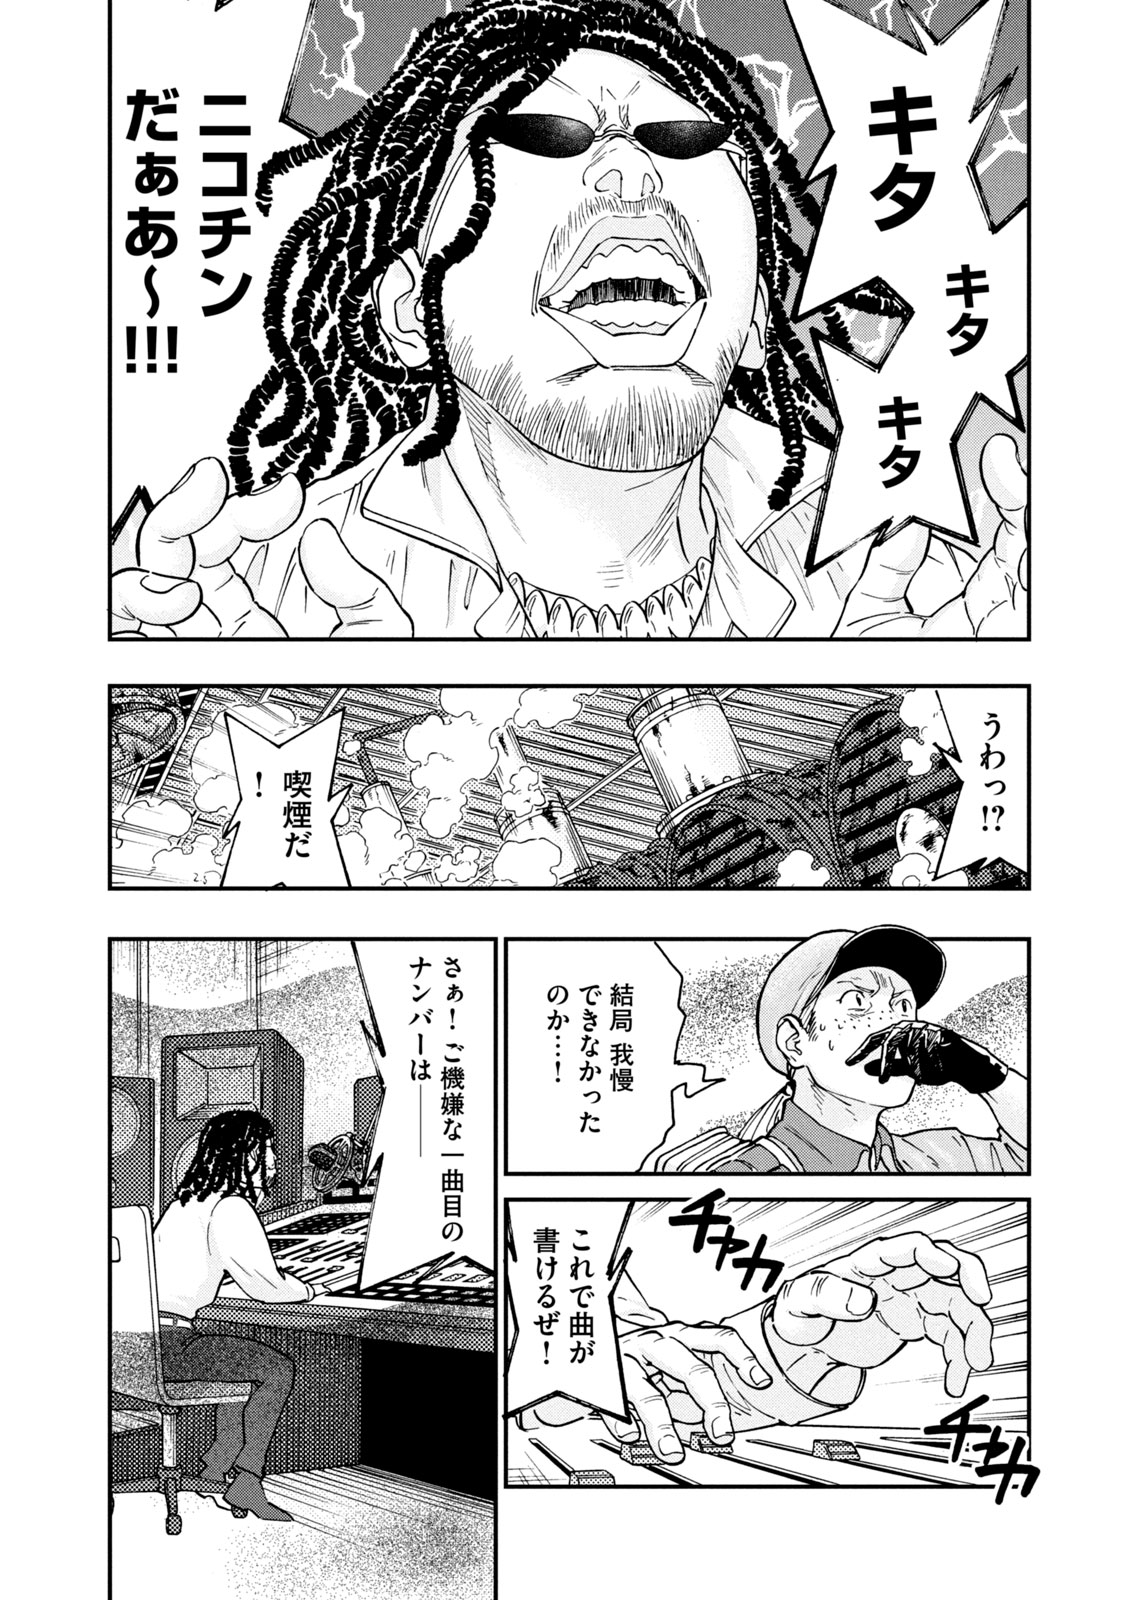 Hataraku Saibou BLACK - Chapter 35 - Page 26